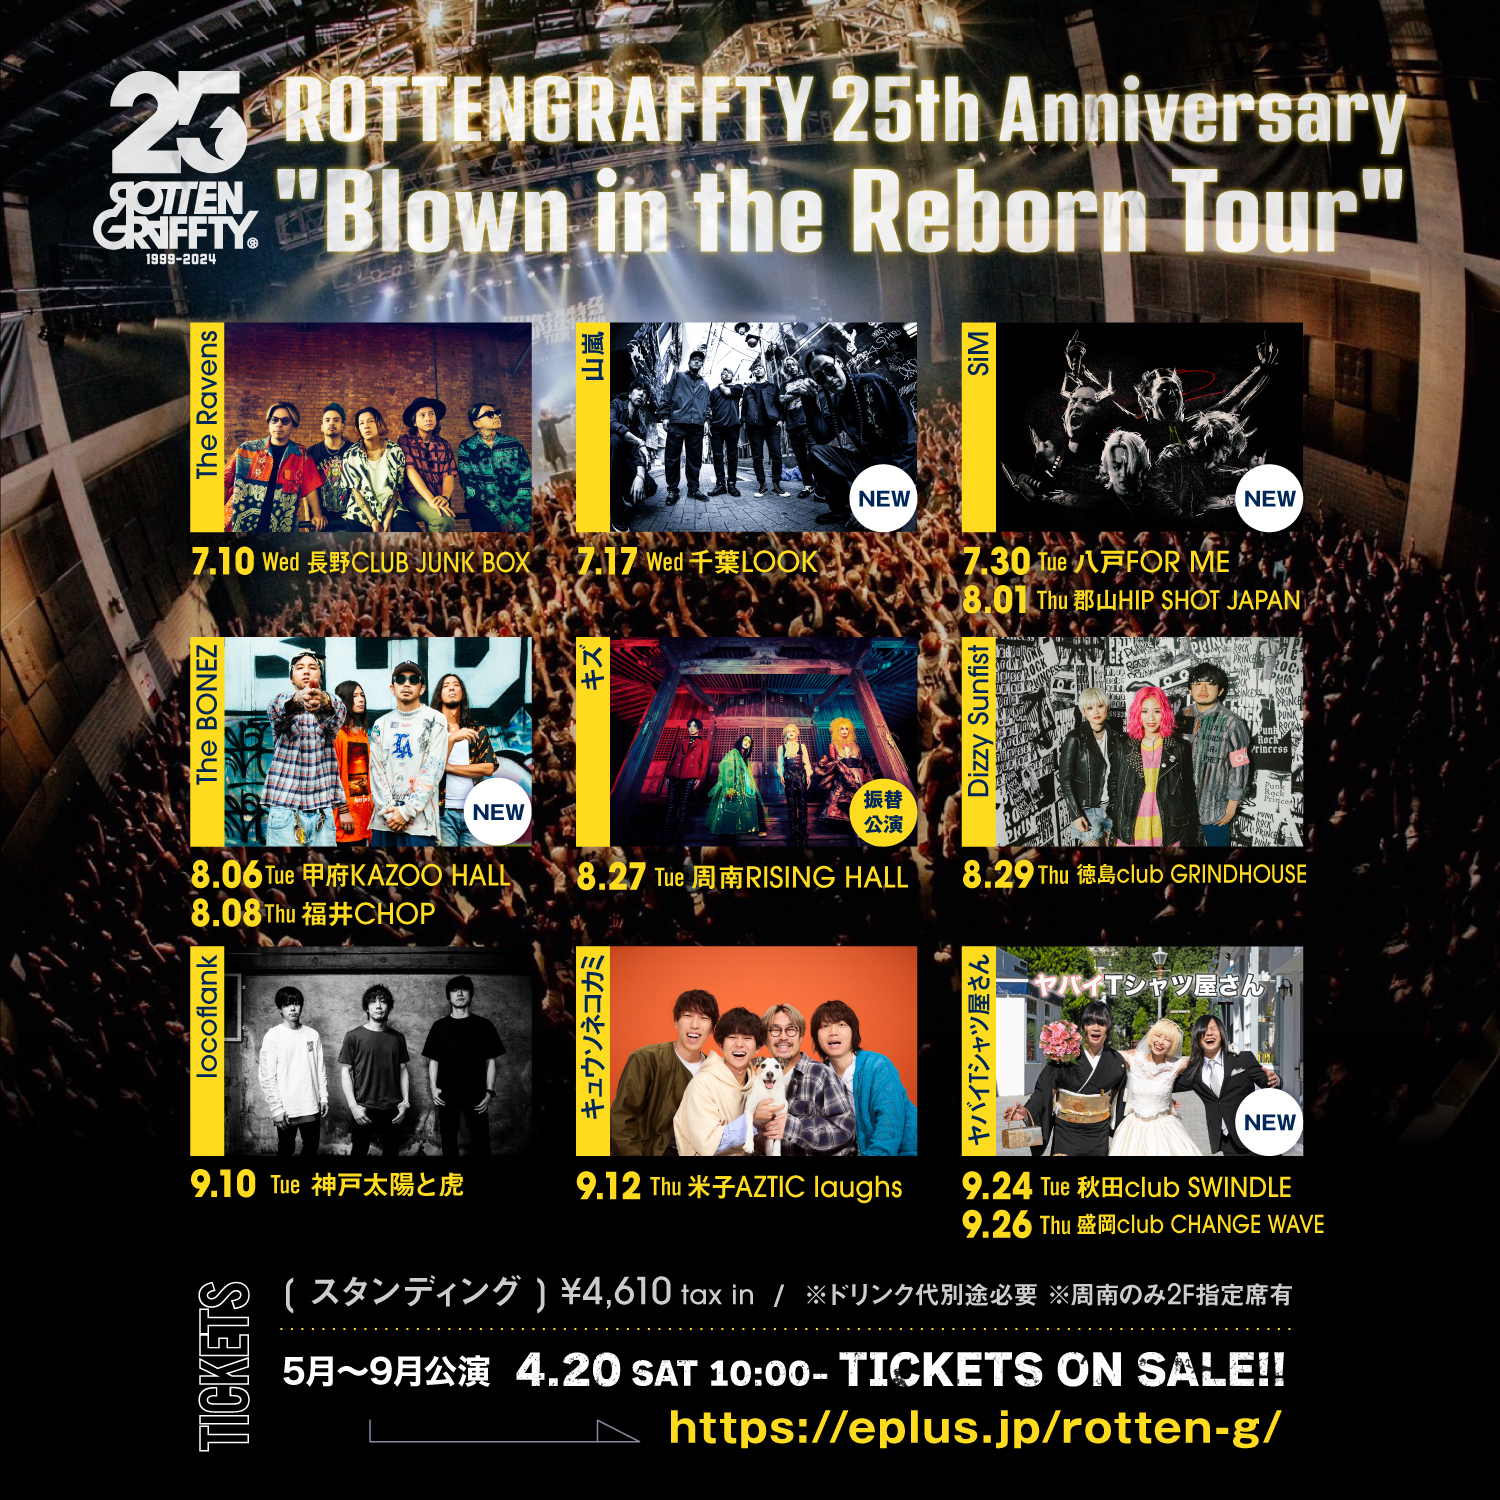 ROTTENGRAFFTY 25th Anniversary “Blown in the Reborn Tour”